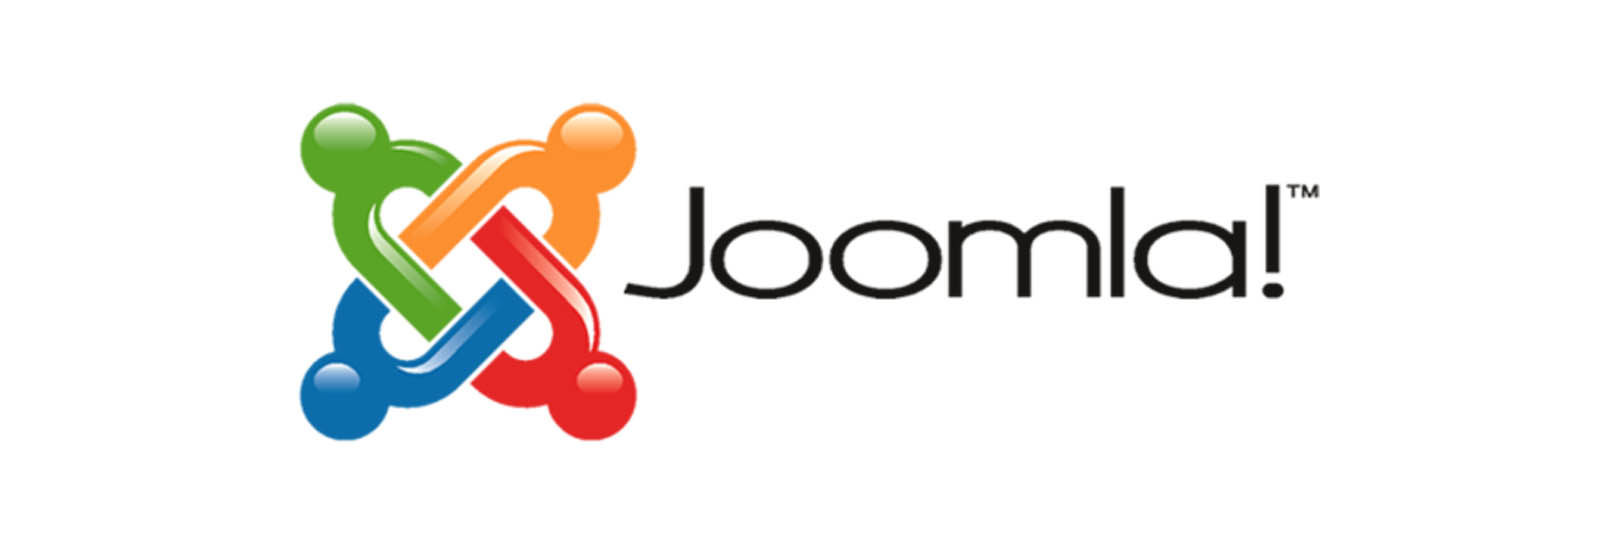 How do I create a custom module position in Joomla?